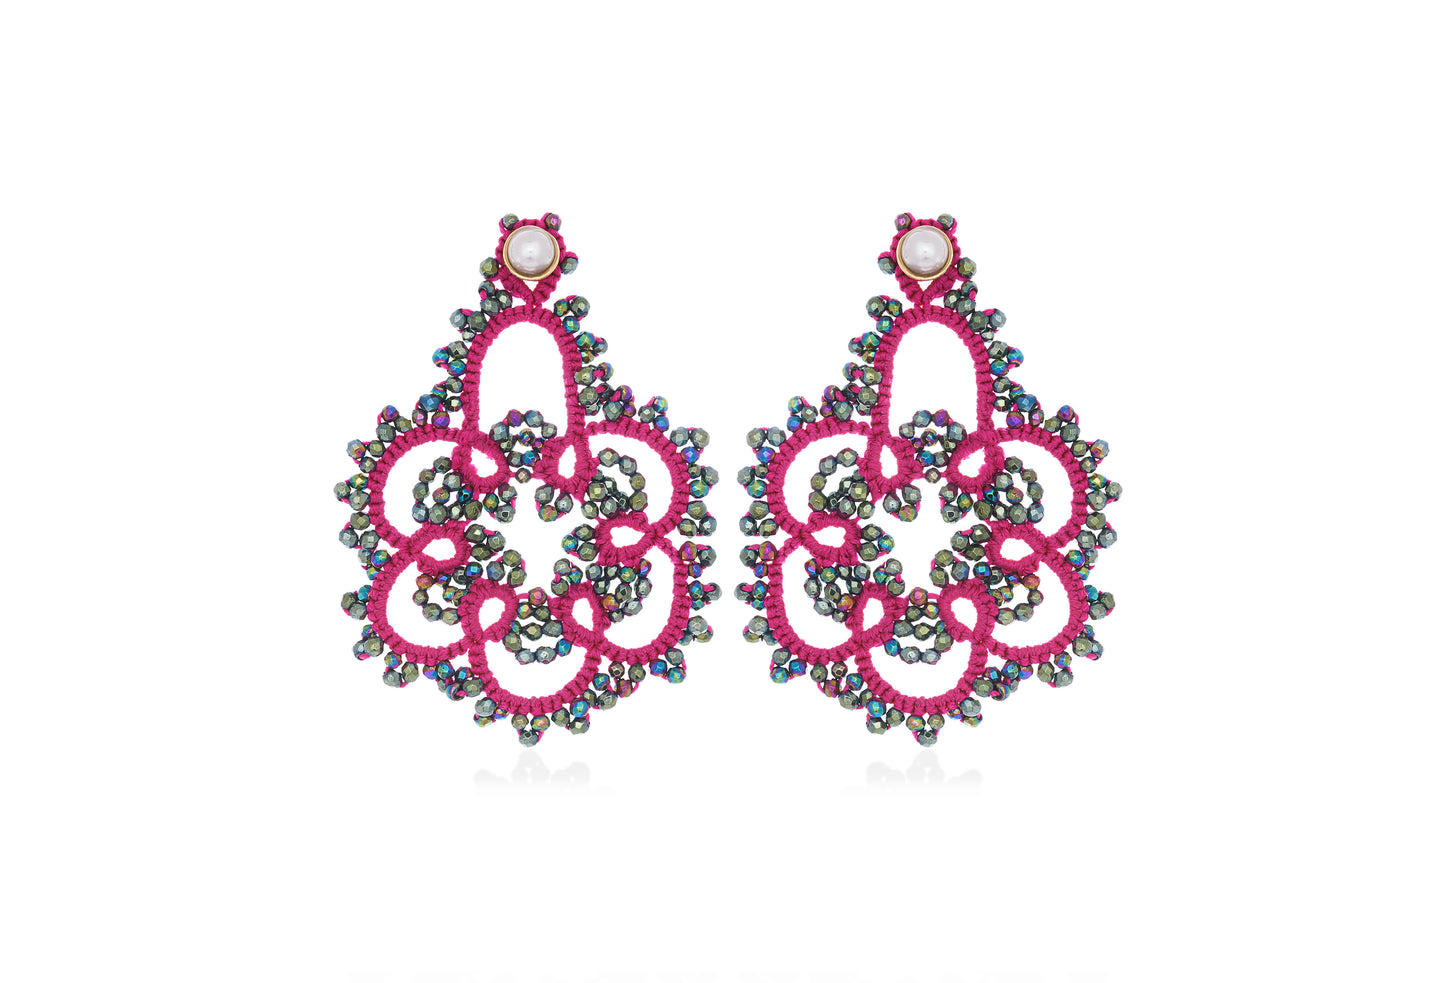 Vintage Flower lace earrings, fuchsia rainbow